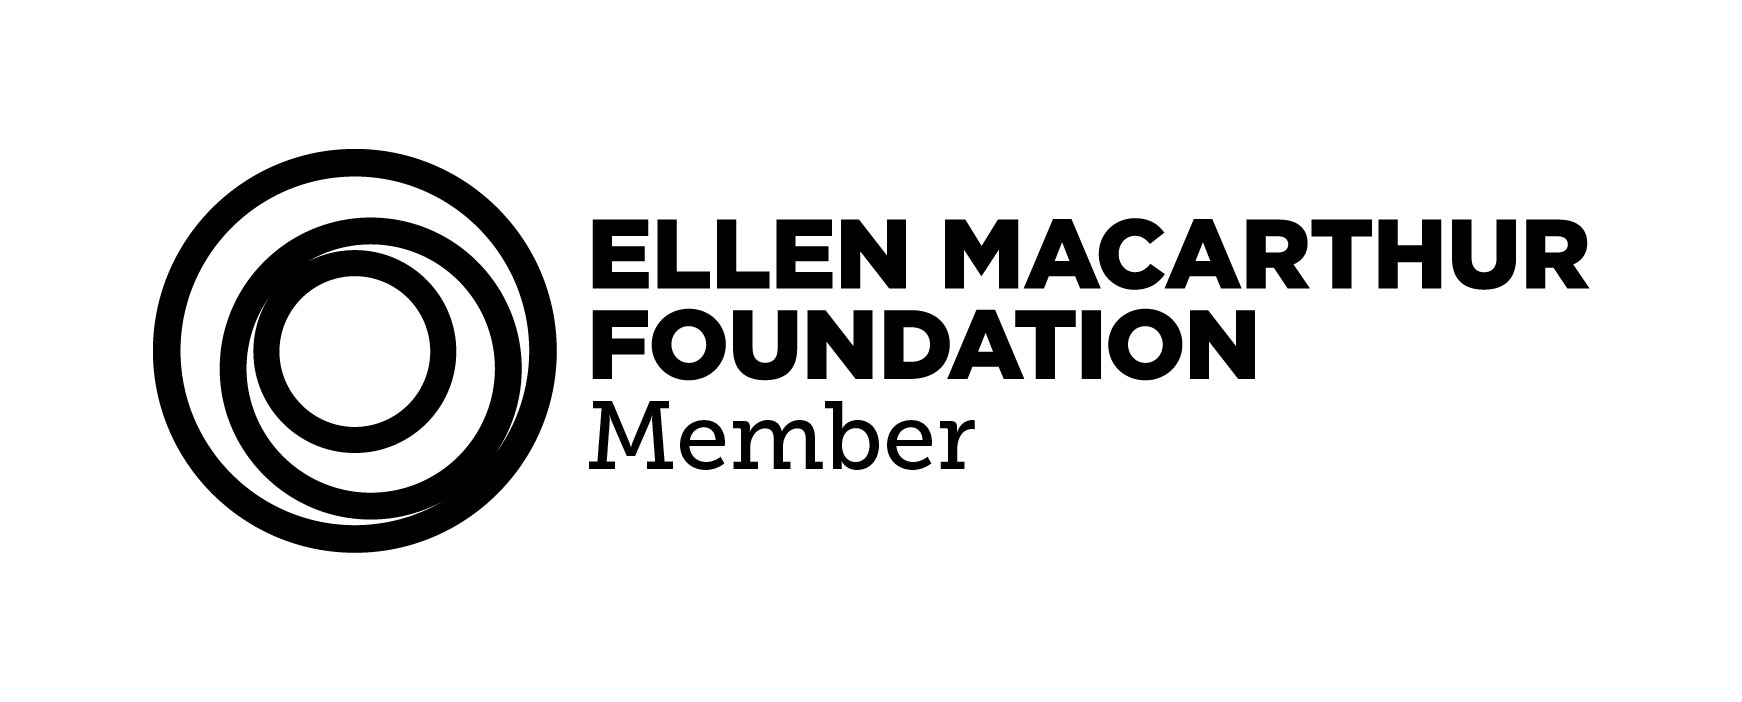 Ellen MacArthur Foundation Member logo